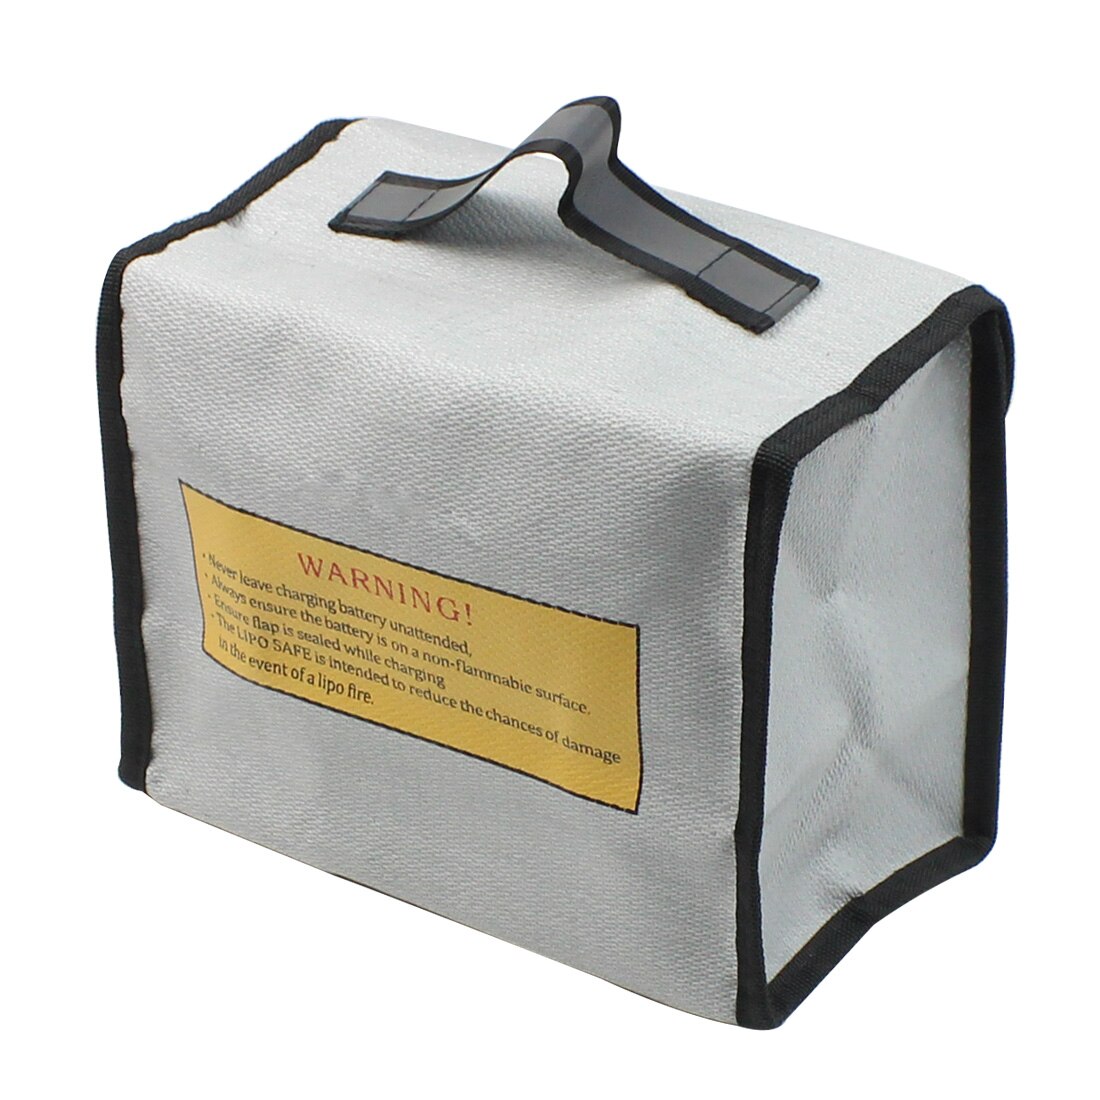 LiPo Batterij Draagbare Explosieveilige Veiligheid Bag Brandwerende RC Safe Guard Charge Sack Met Handvat Tas voor RC speelgoed f20874